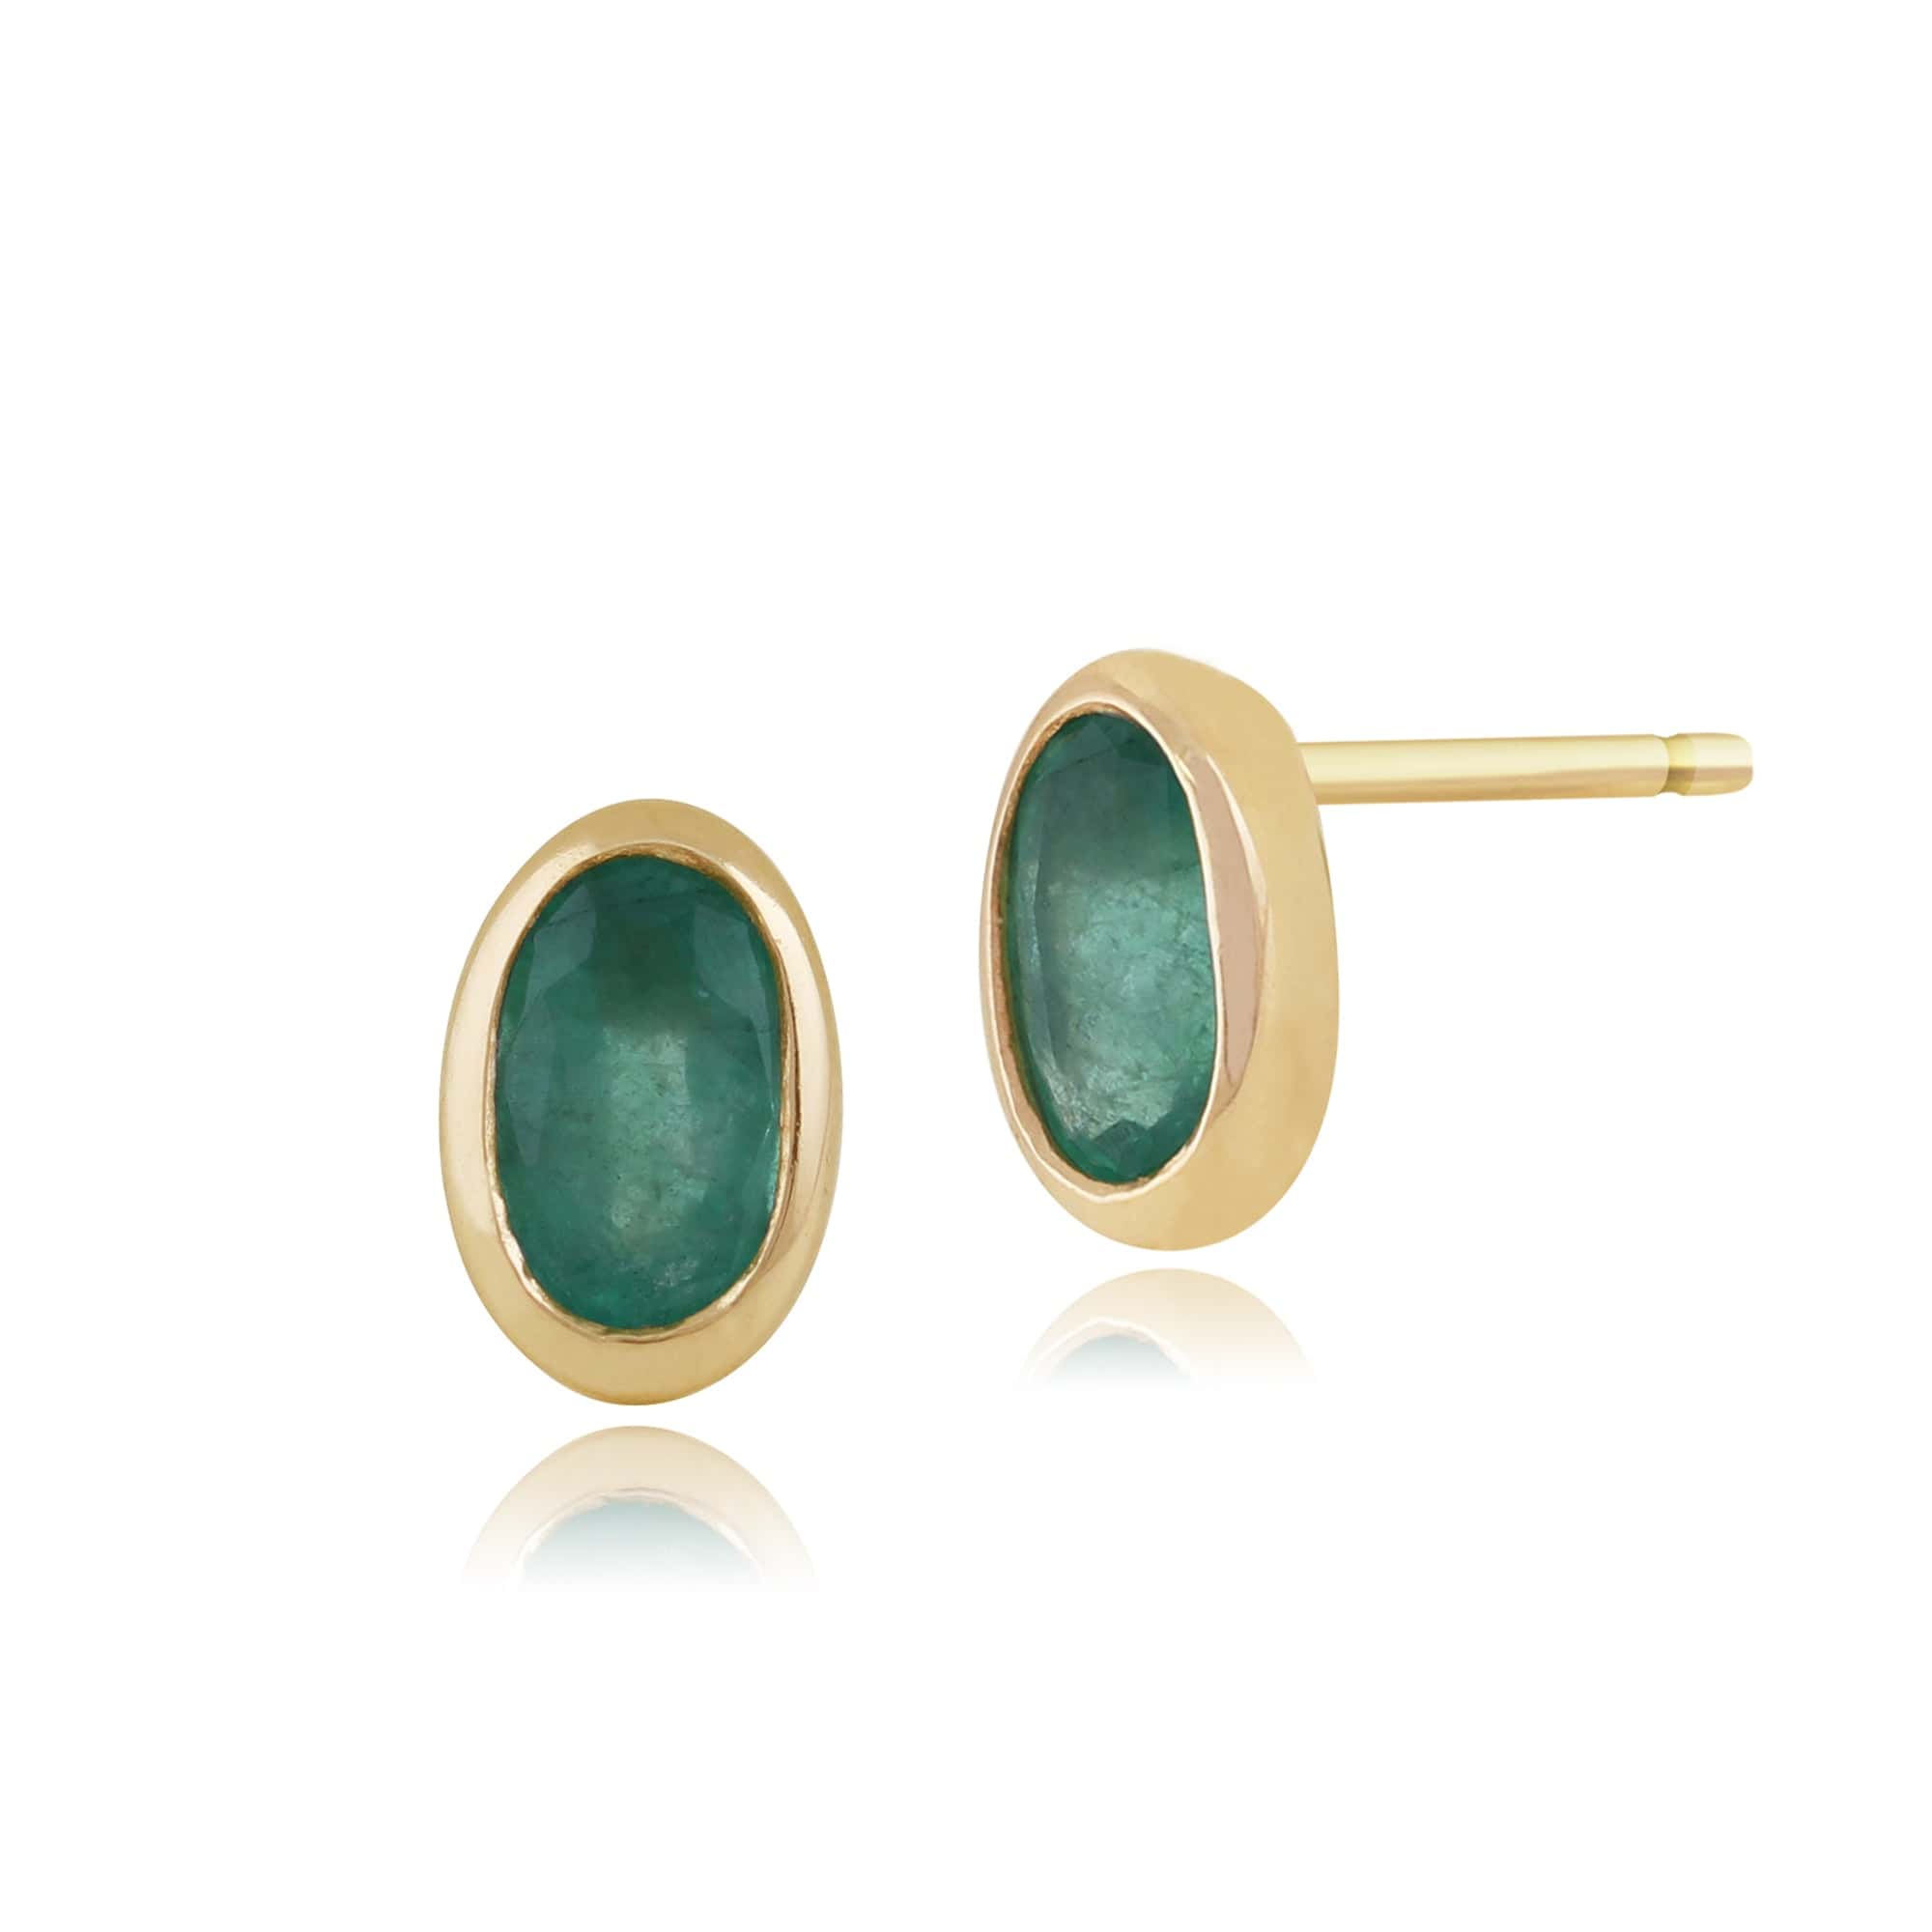 Classic Oval Emerald Stud Earrings in 9ct Yellow Gold 6.5x4mm - Gemondo